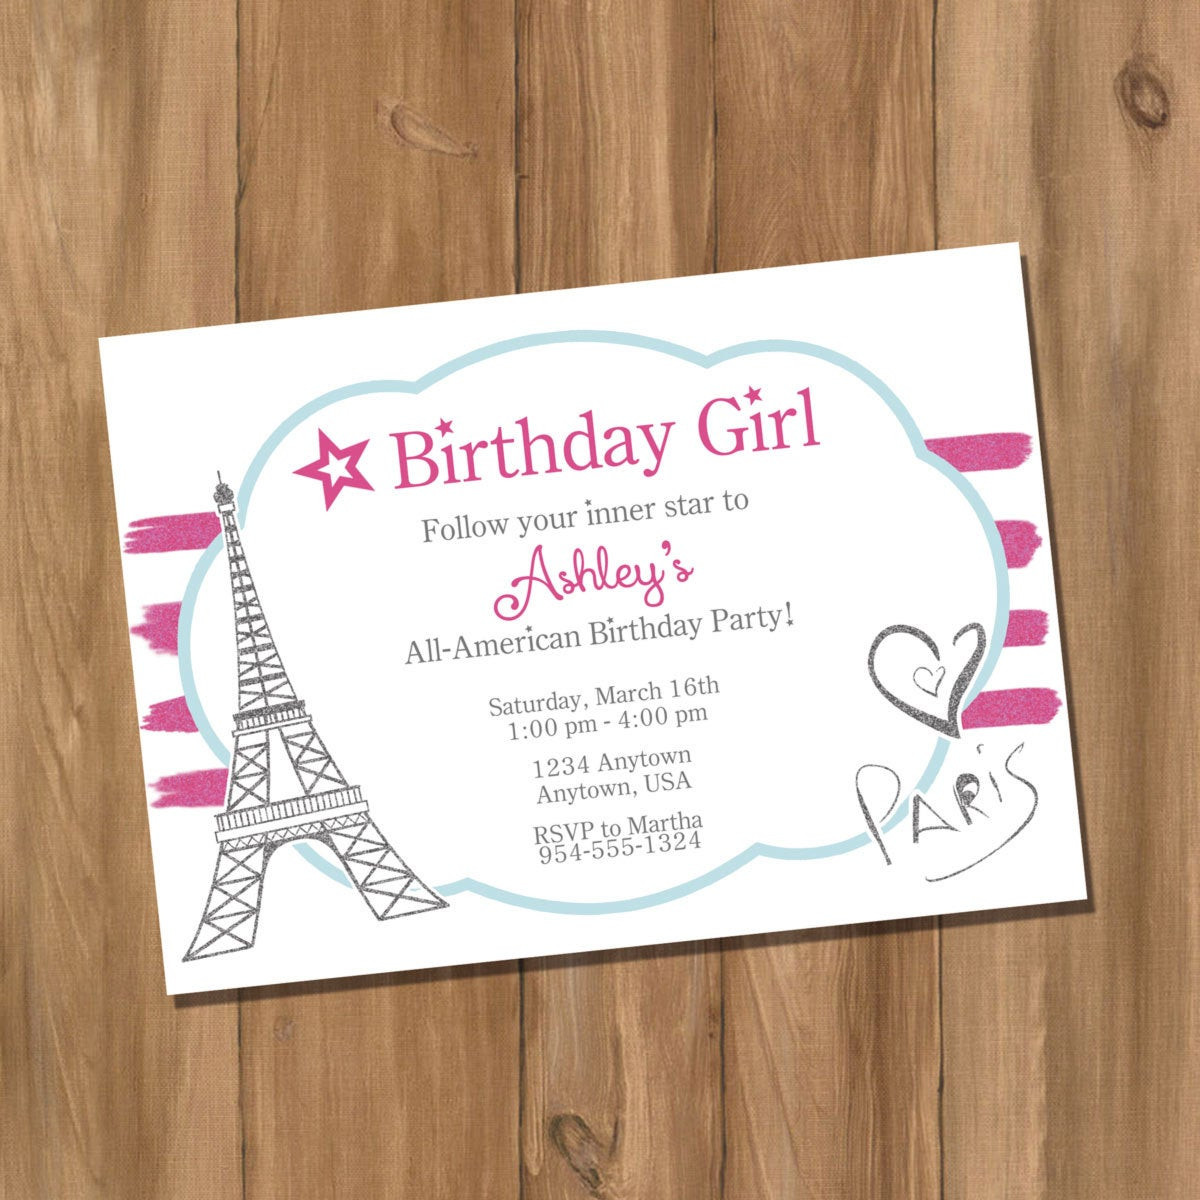 American Girl Birthday Party Invitations
 American Doll Girl Birthday Party Invitation 2015 Paris